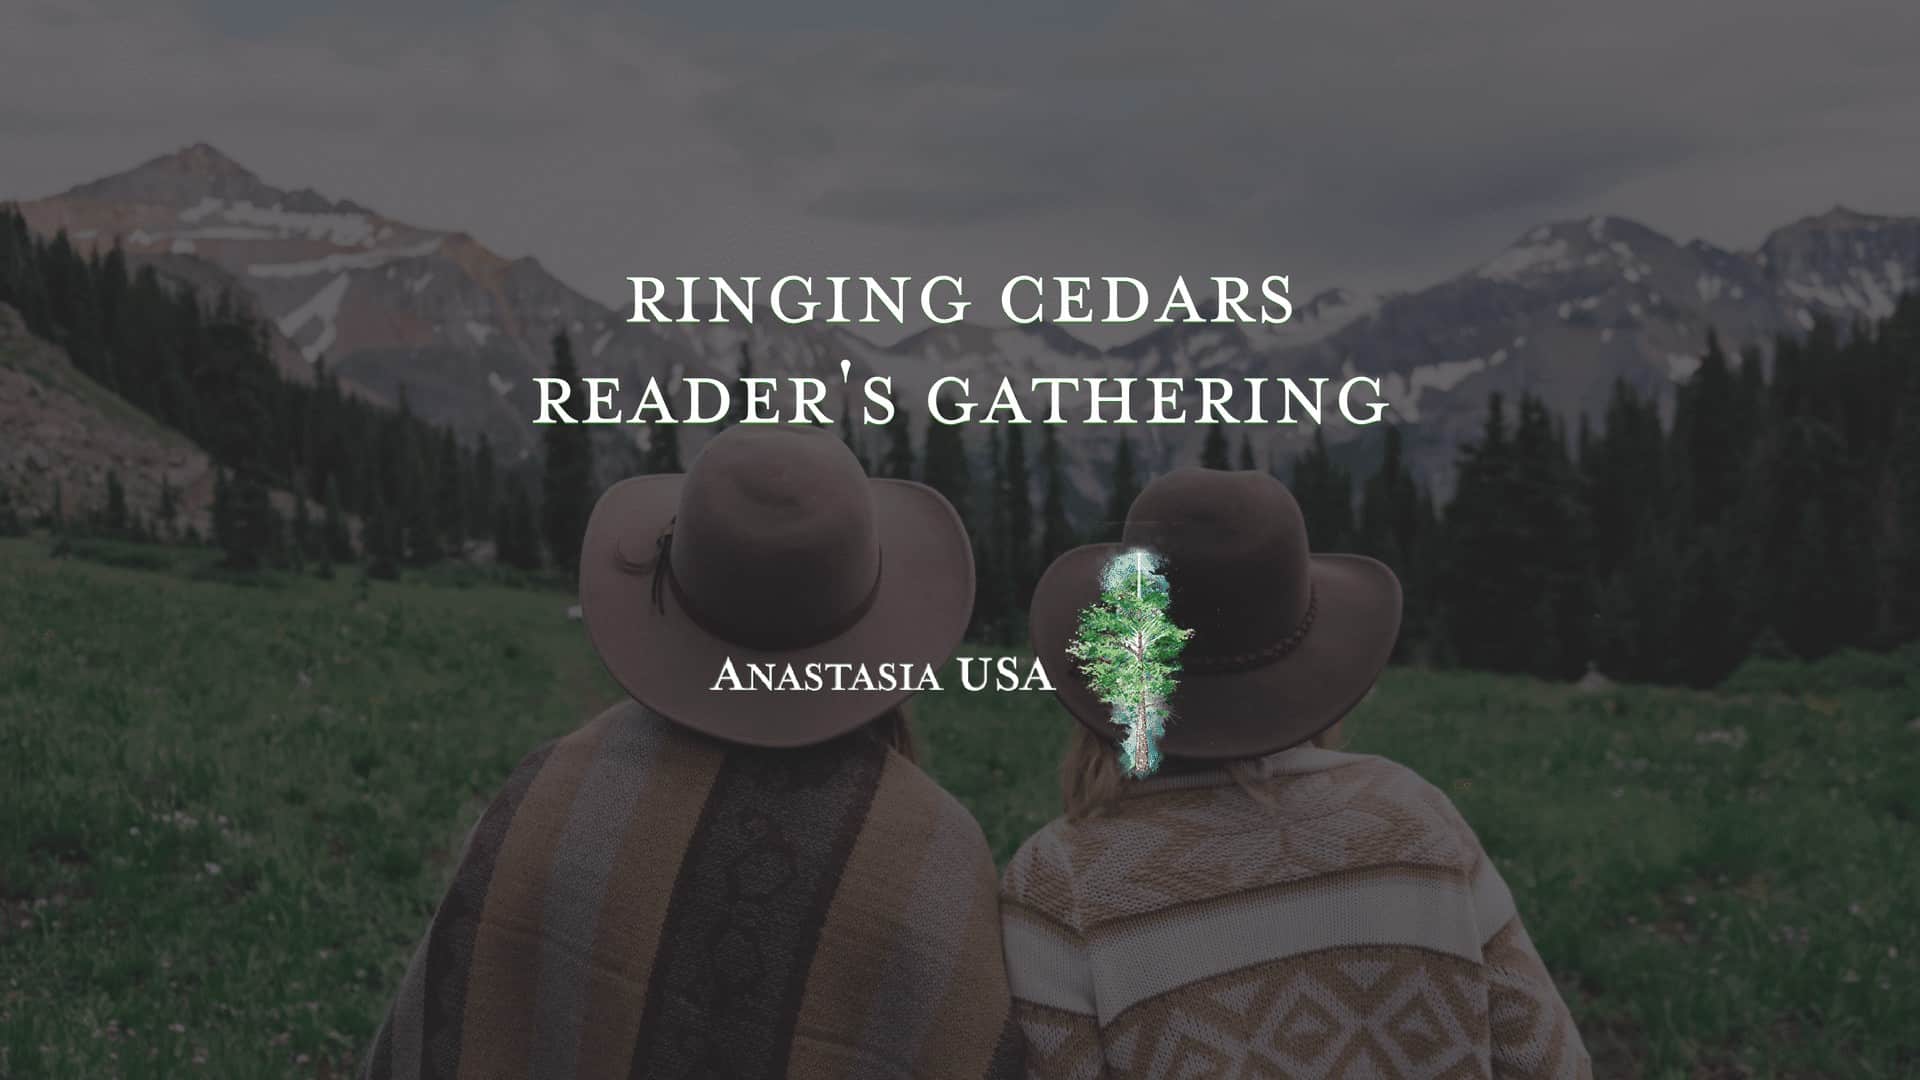 may 20 nyc ringing cedars of russia reader's gathering anastasia usa